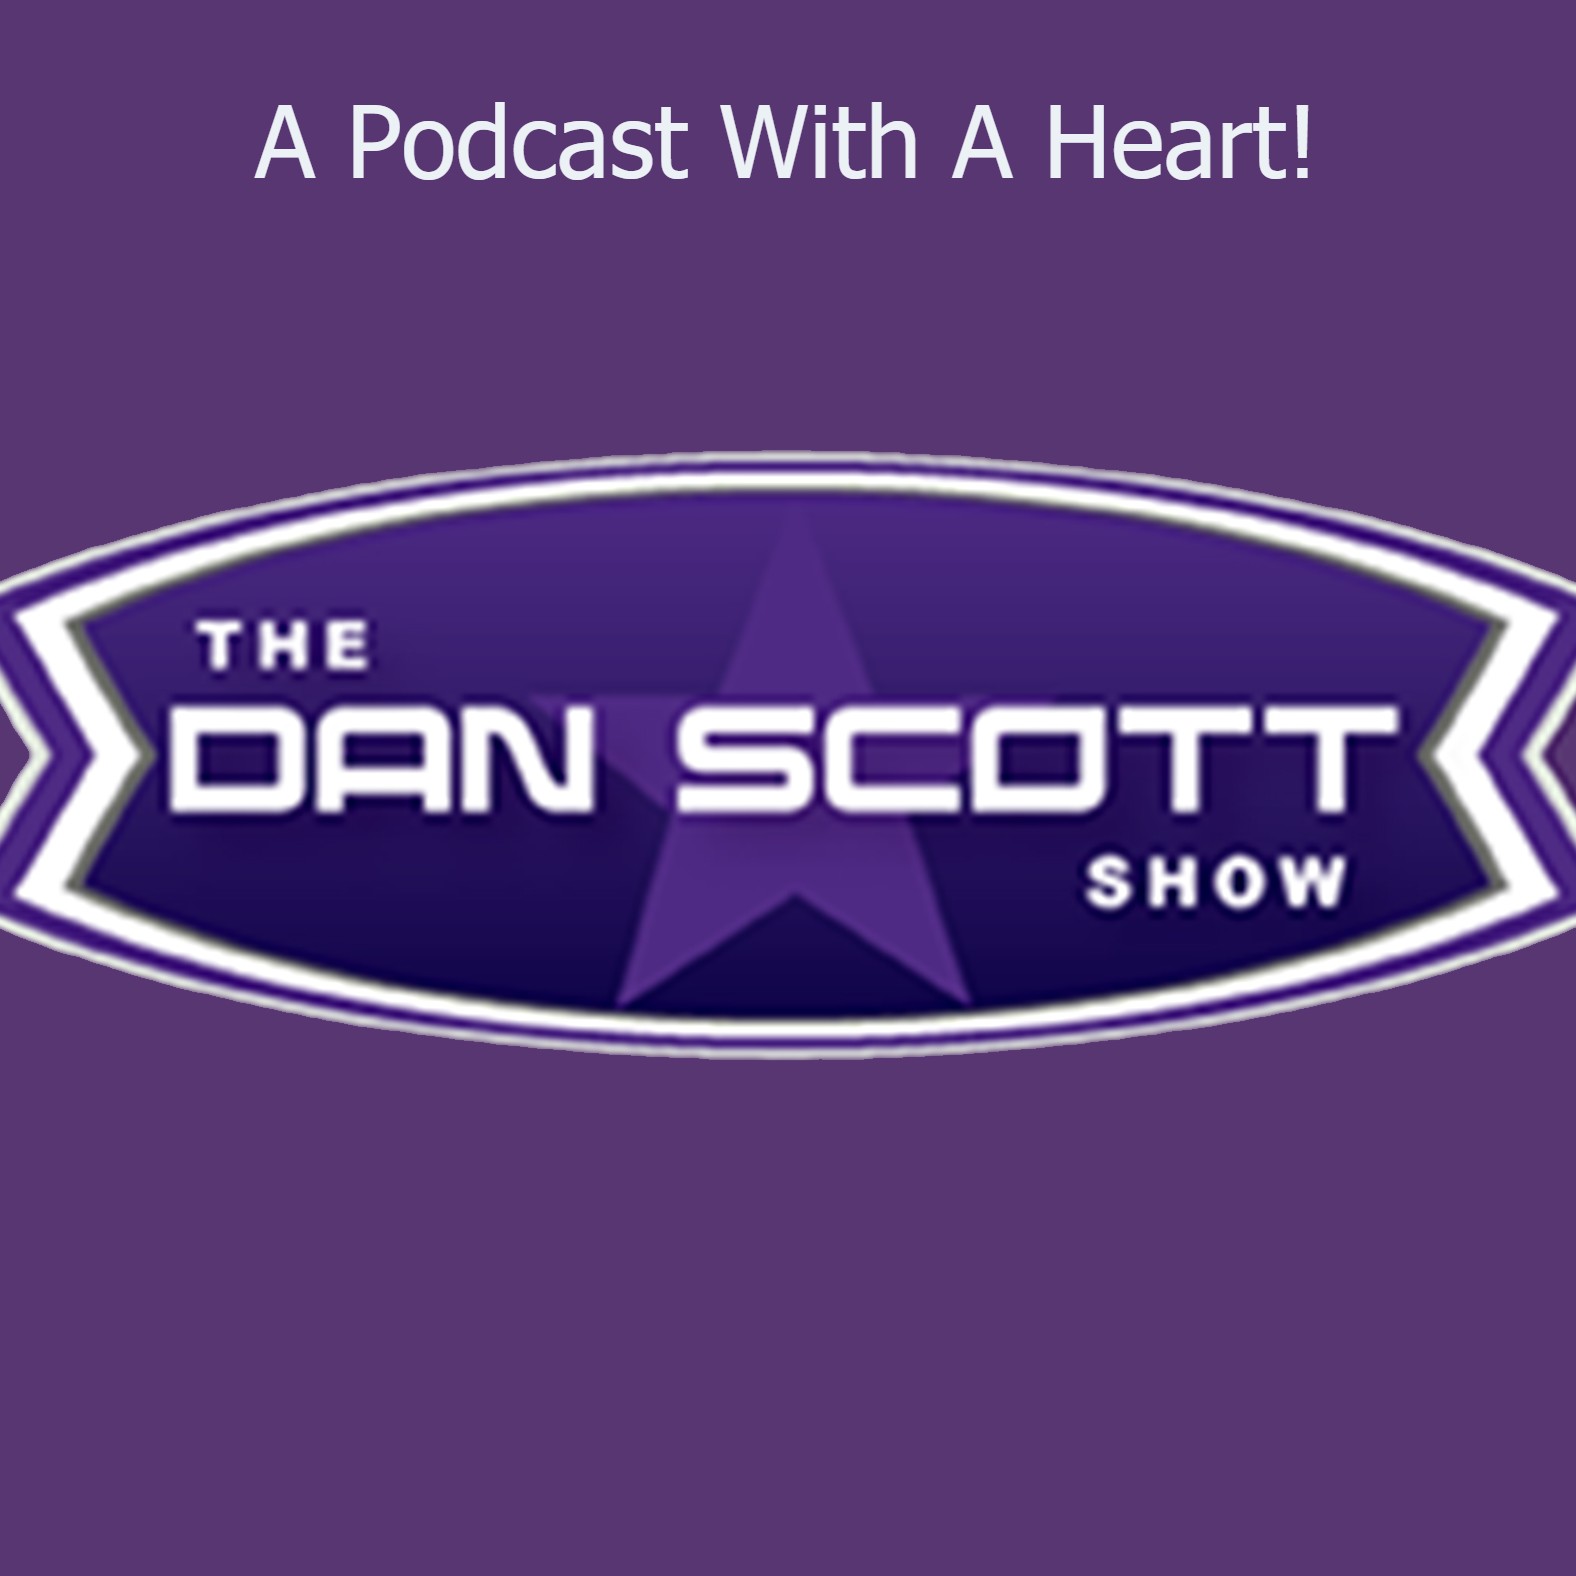 The Dan Scott Show Podcast